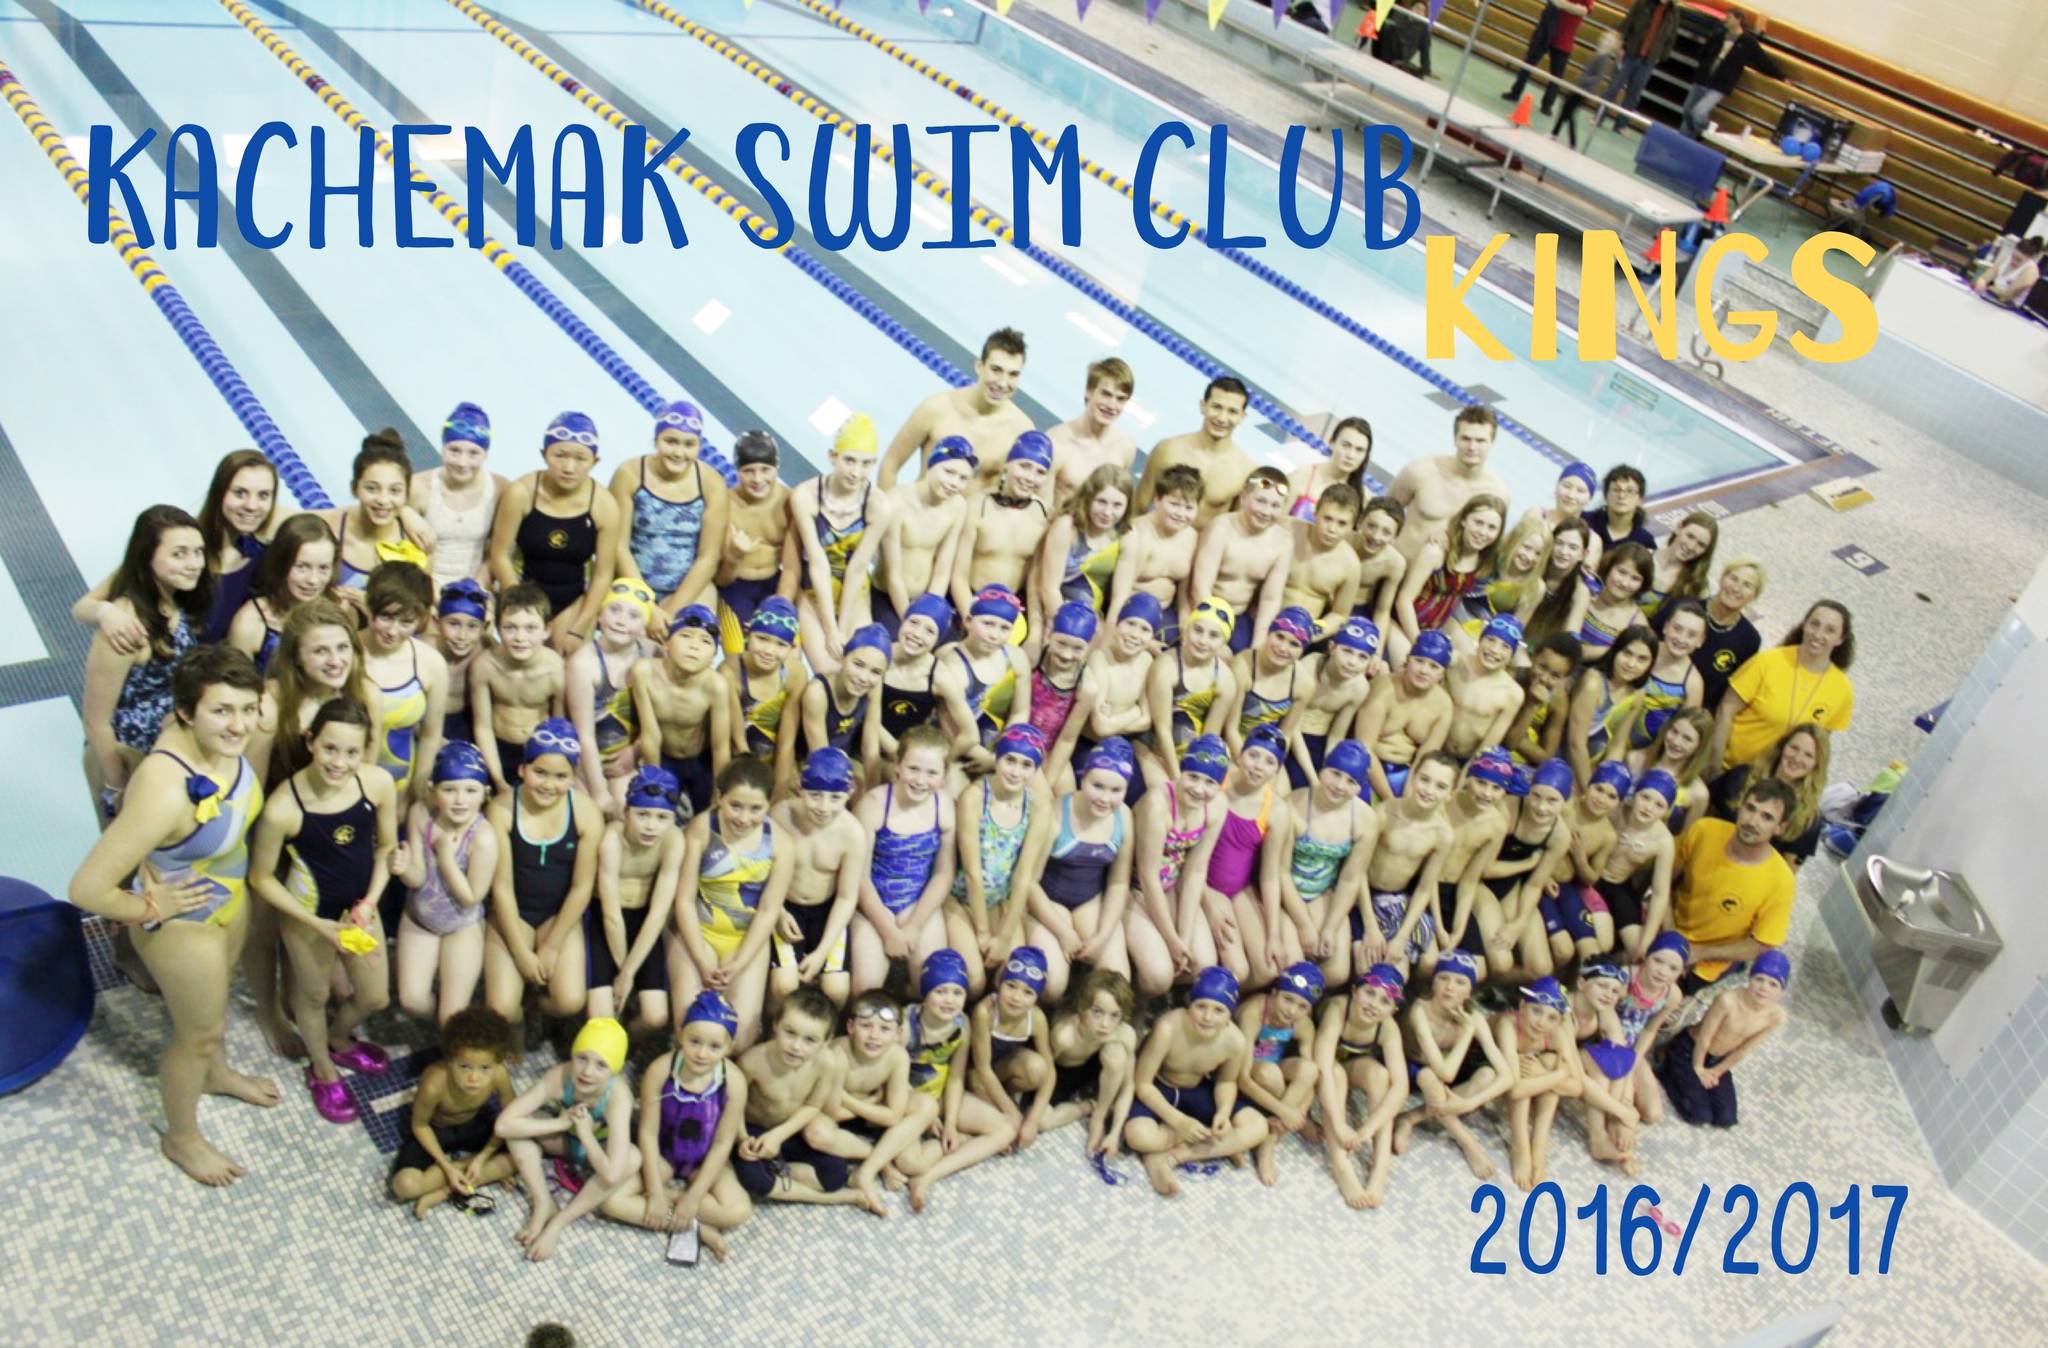 Swim club enjoys growth, launches summer lessons